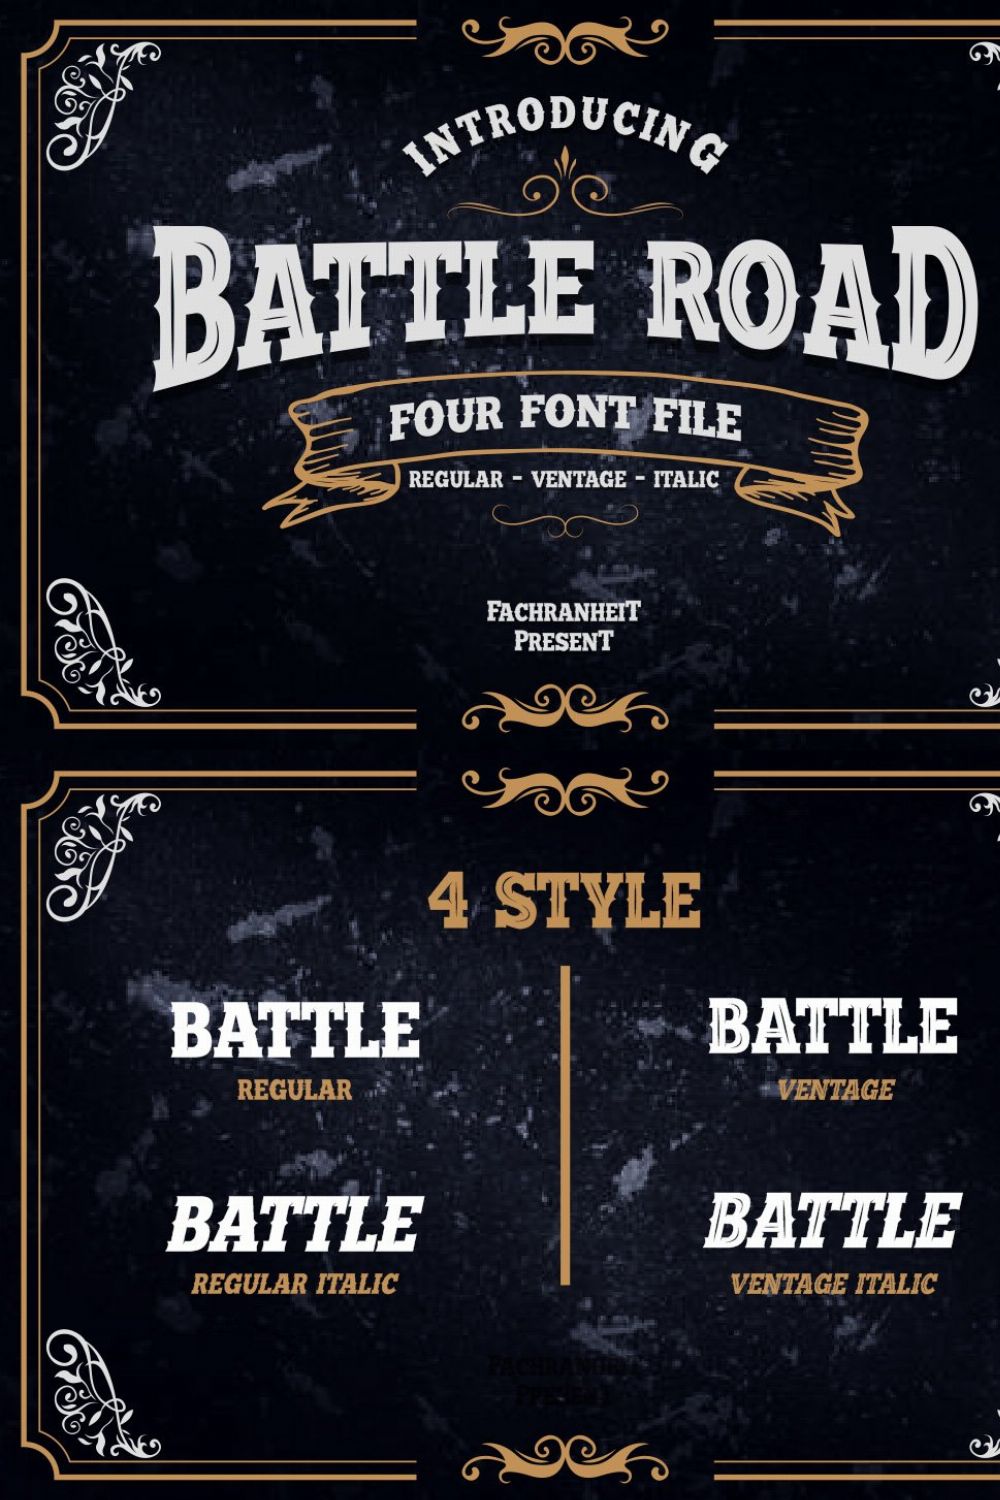 Battle Road pinterest preview image.